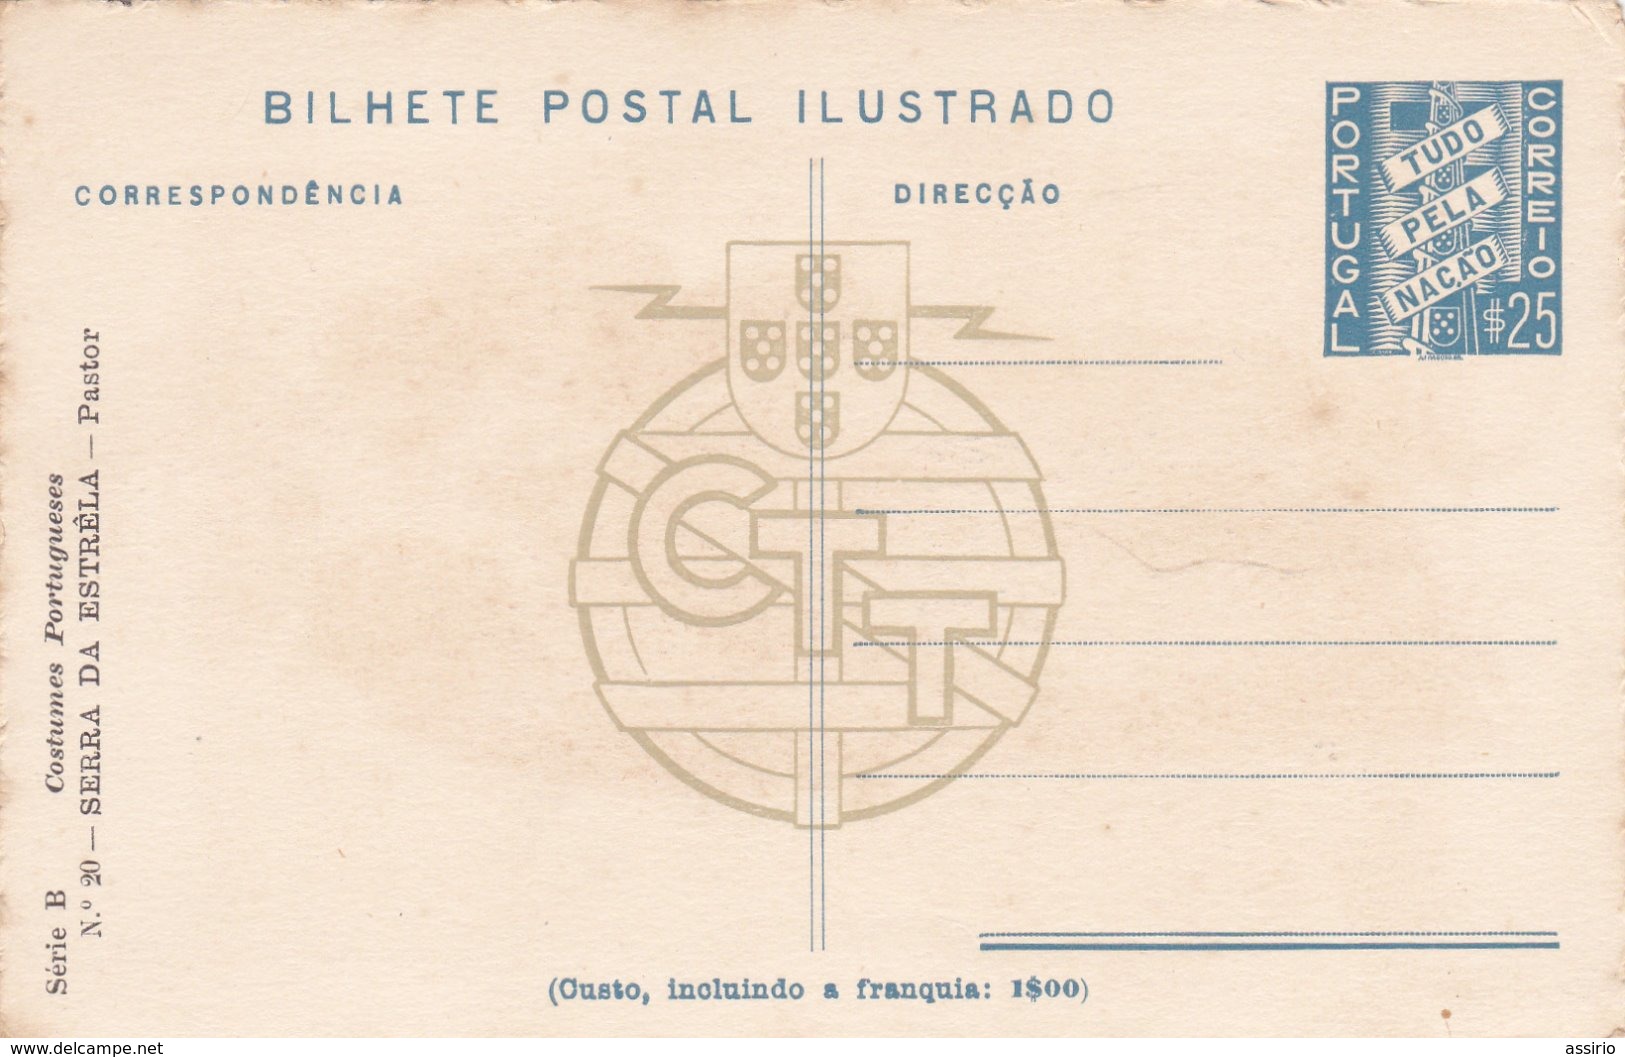 Portugal -bilhete postal ilustrado -costumes portugueses nºs 10 a 20